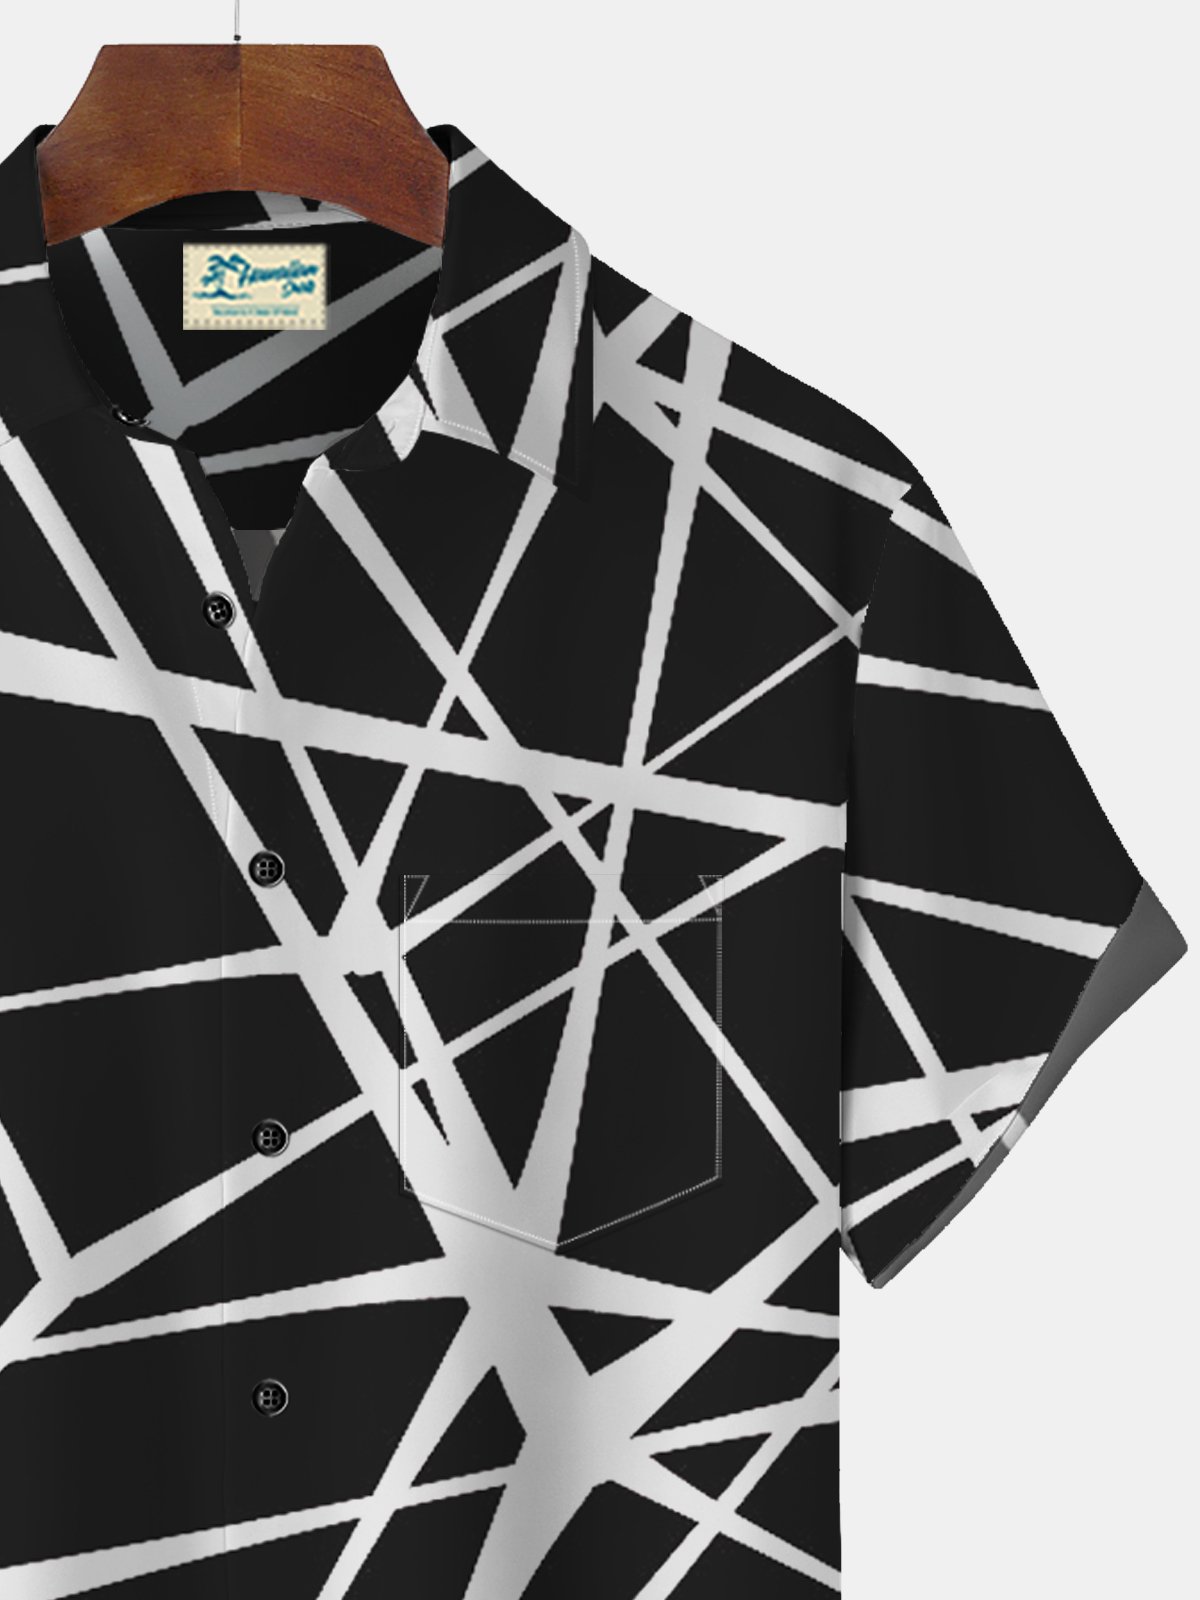 Royaura Vintage Rock Geometric Print Men's Button Pocket Short Sleeve Shirt